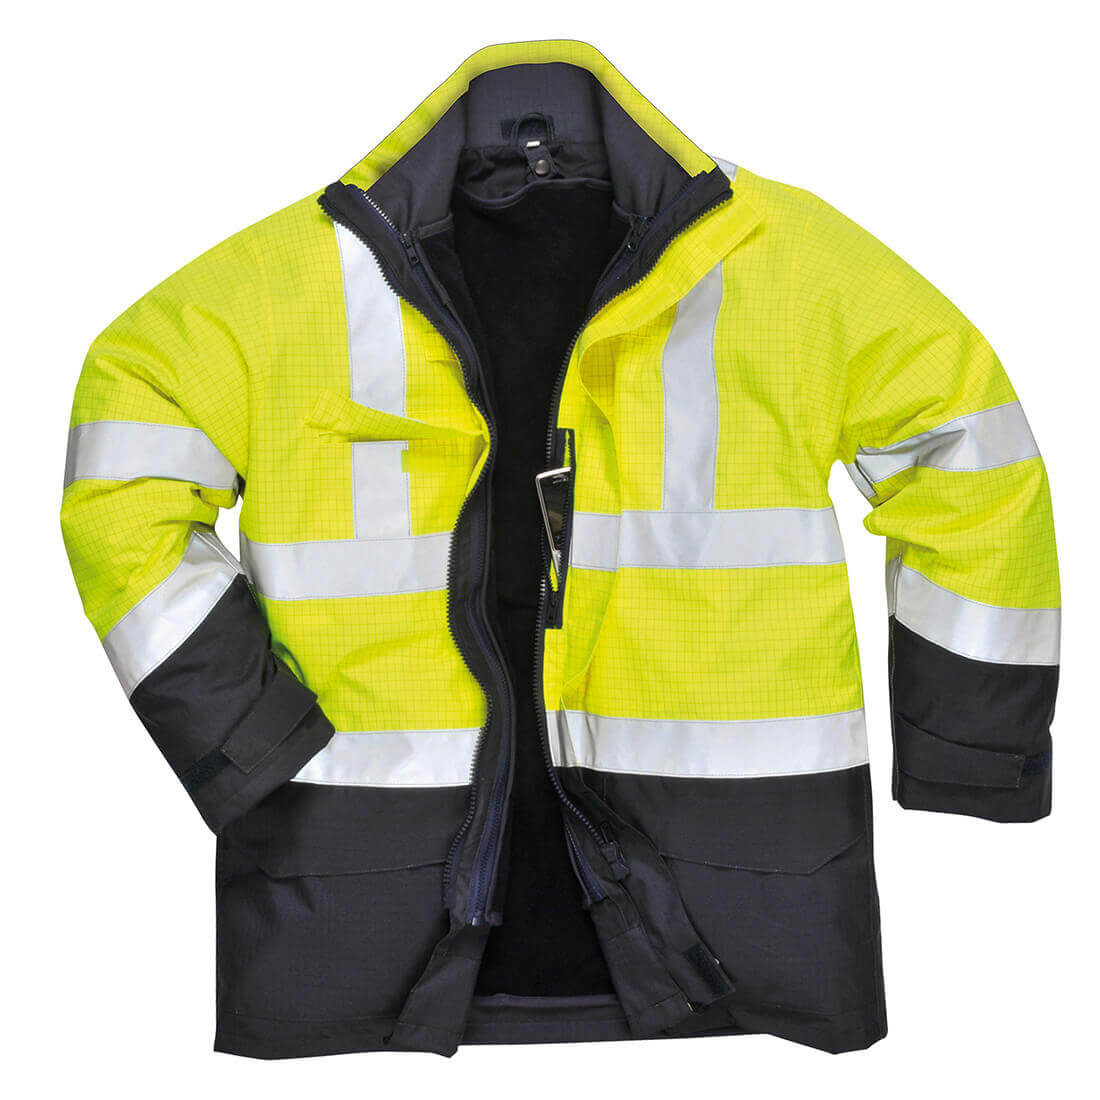 Image of Biz Flame Hi Vis Flame Resistant Rain Multi Protection Jacket Yellow / Navy 3XL